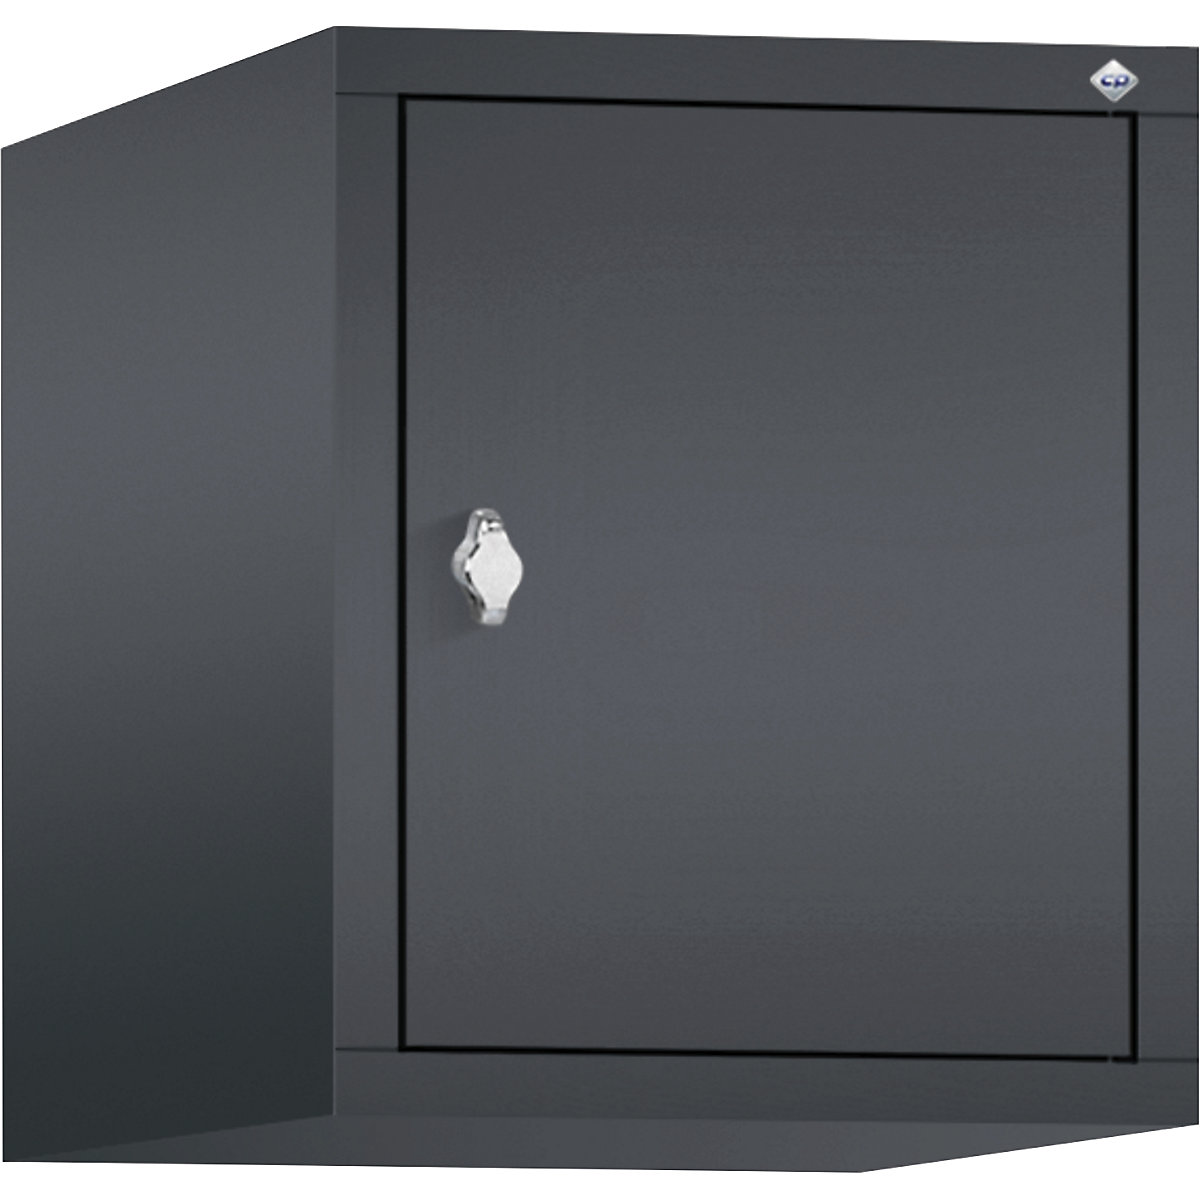 C+P – Altillo CLASSIC, 1 compartimento, anchura de compartimento 400 mm, gris negruzco